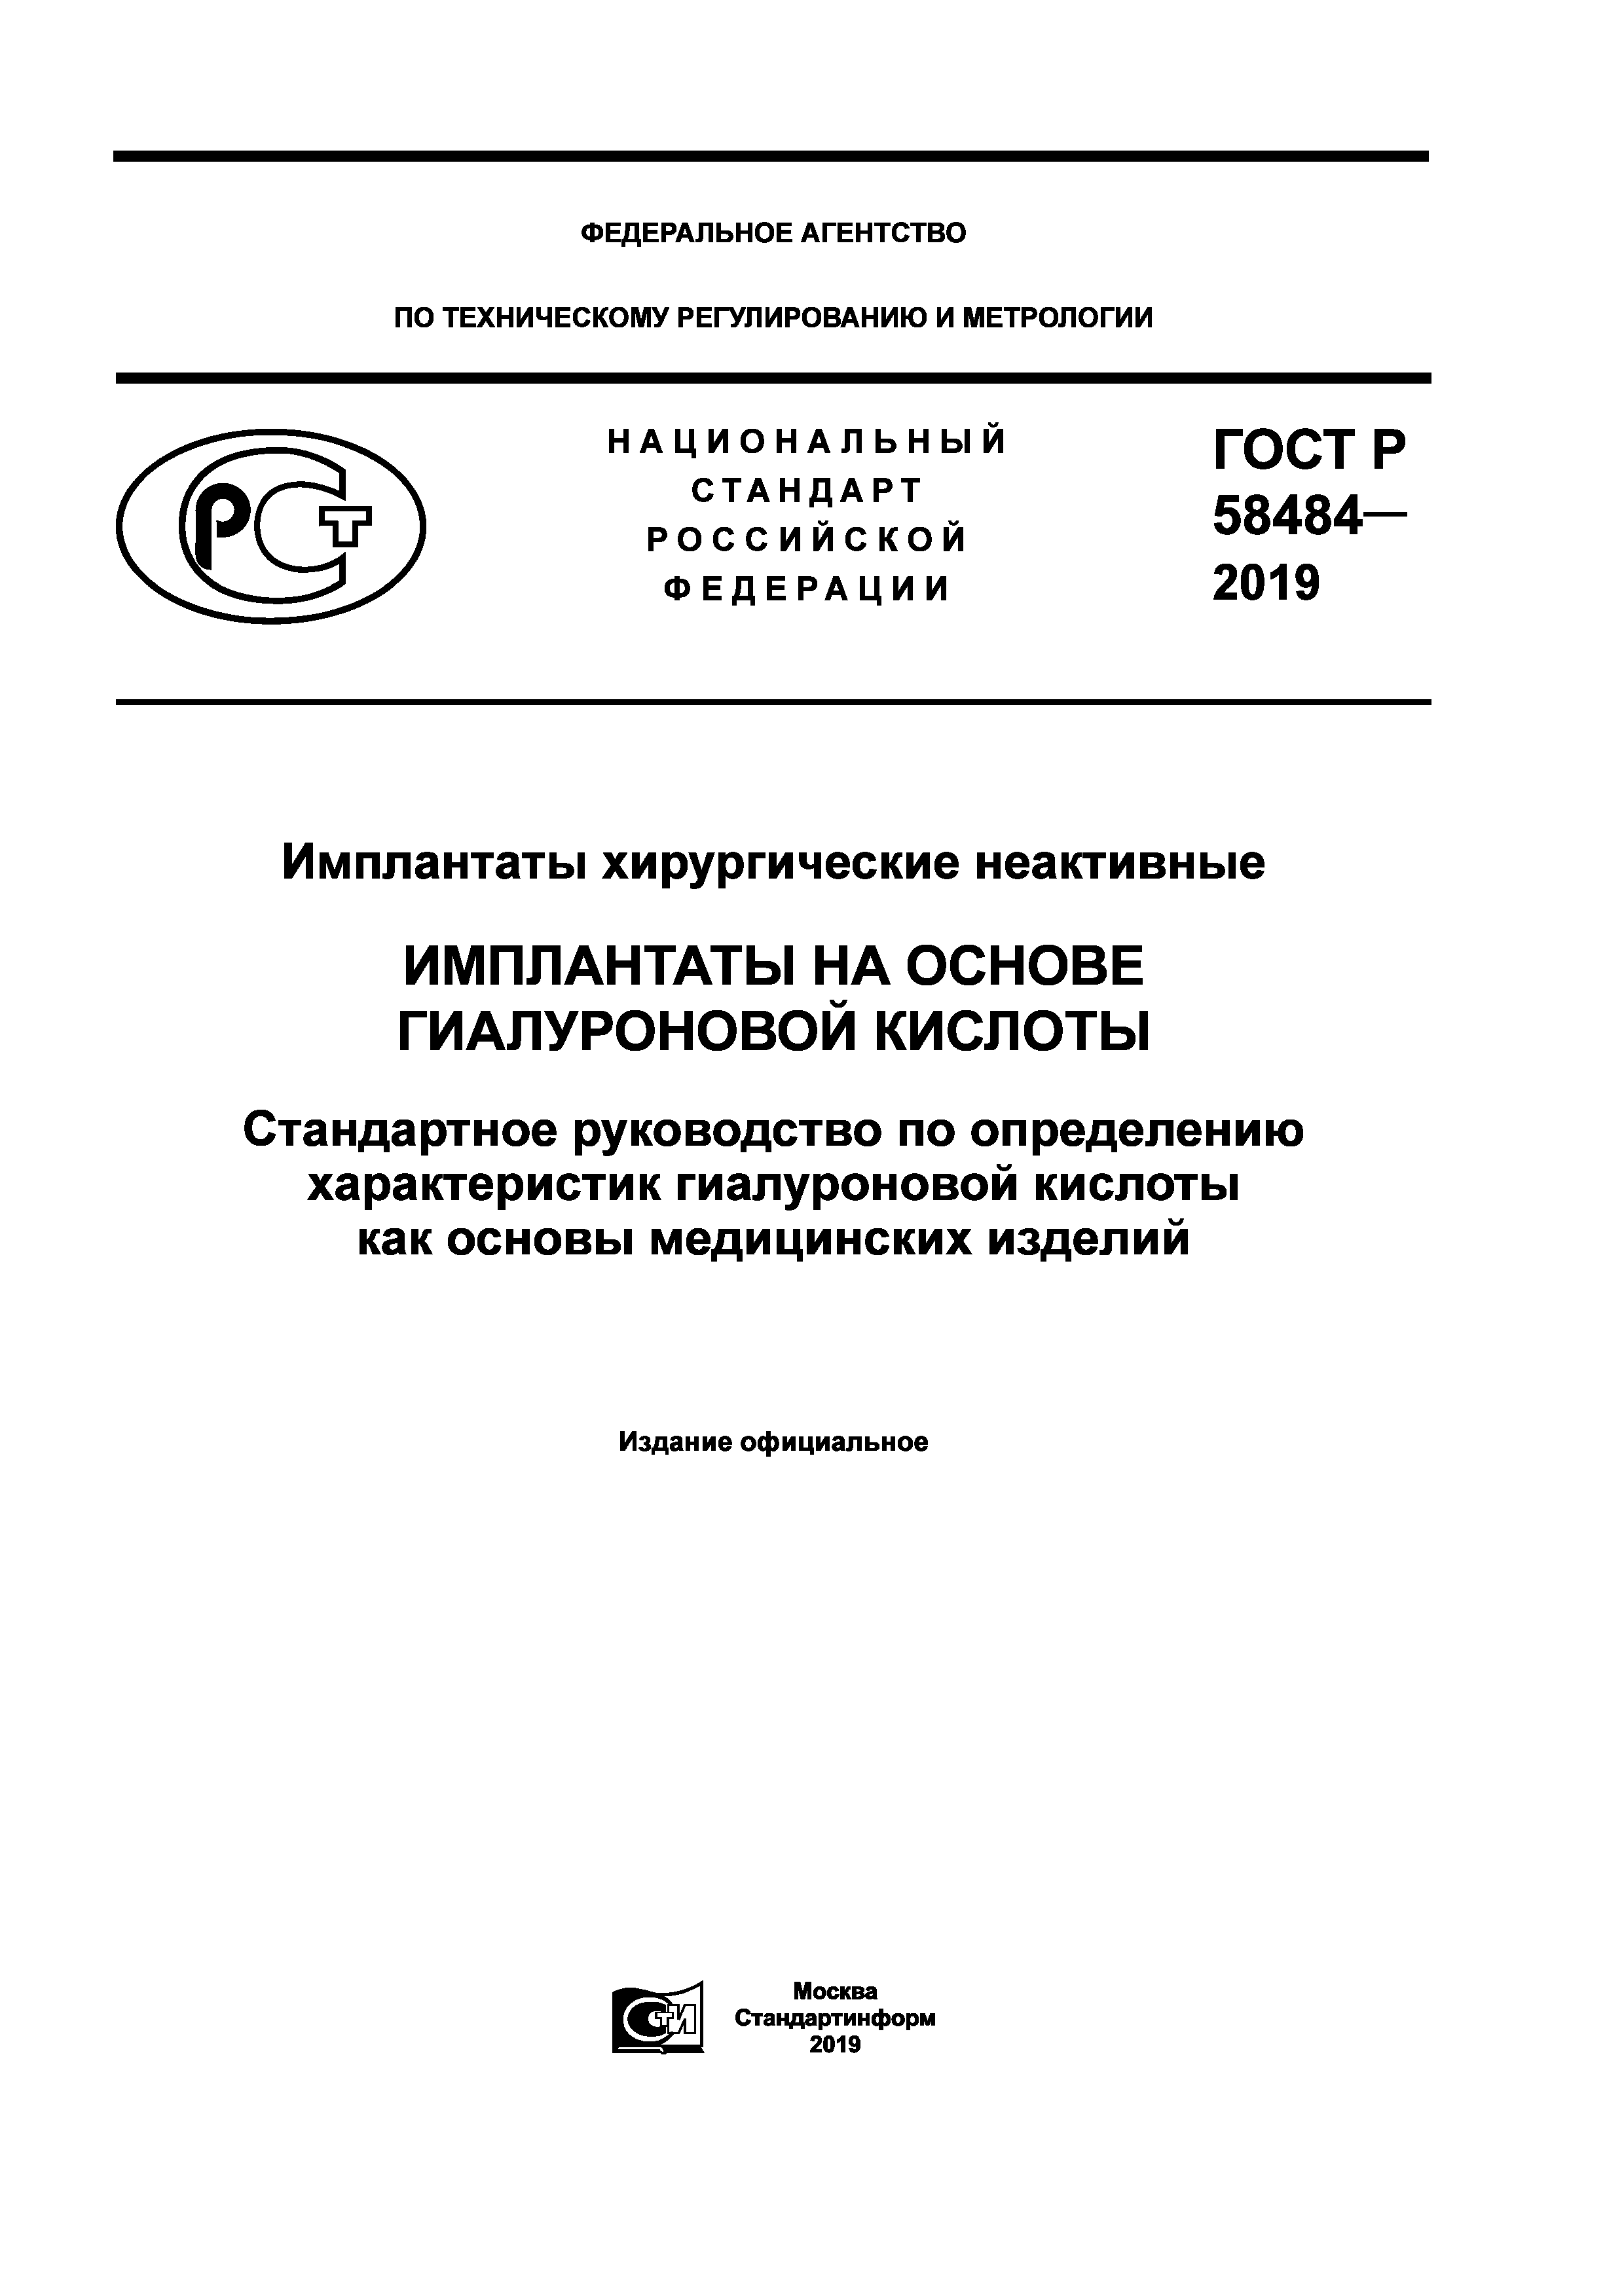 ГОСТ Р 58484-2019